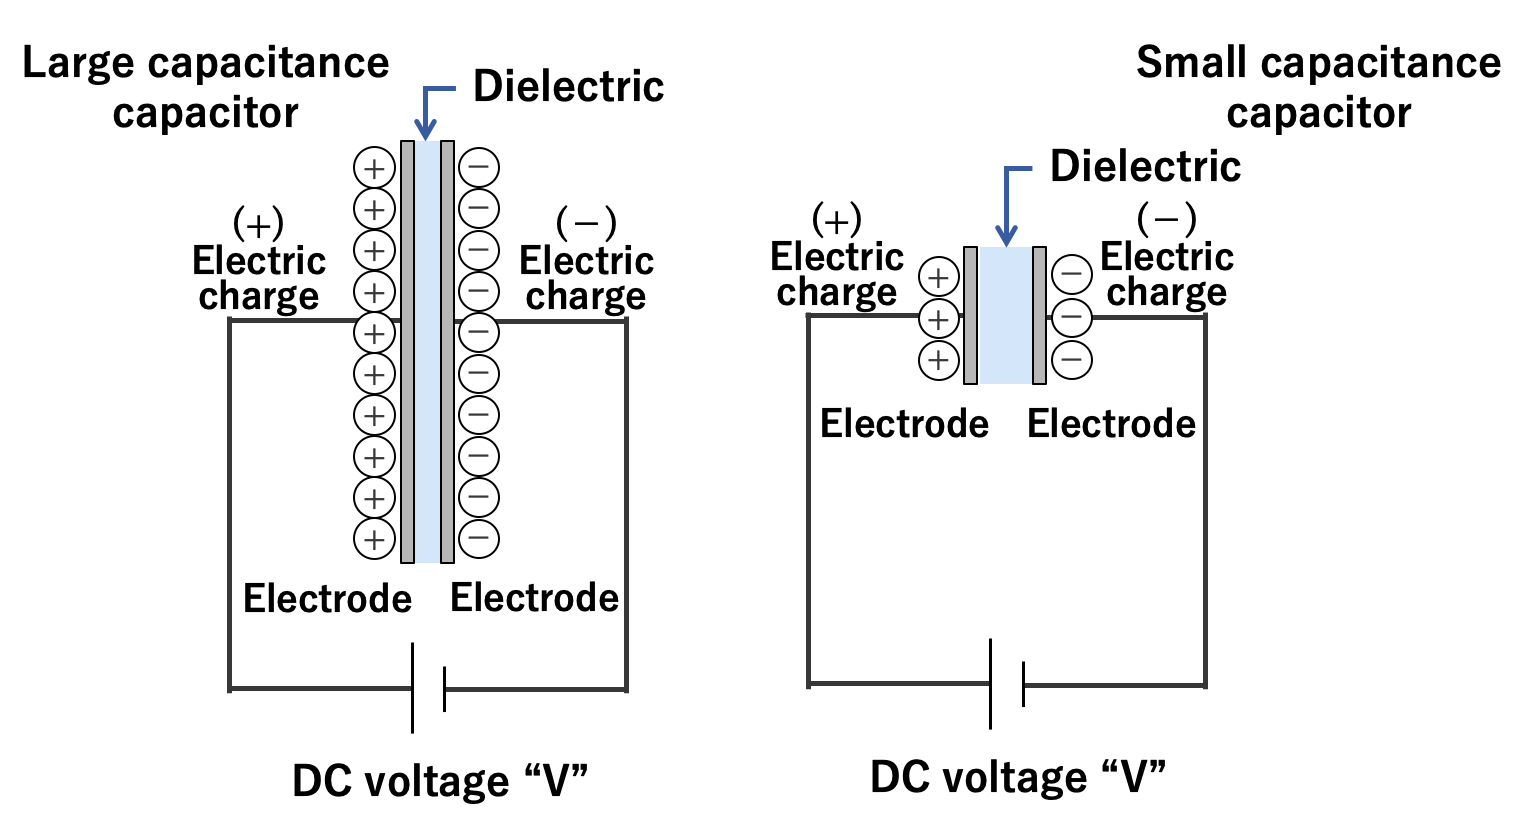 large capacitance capacitor